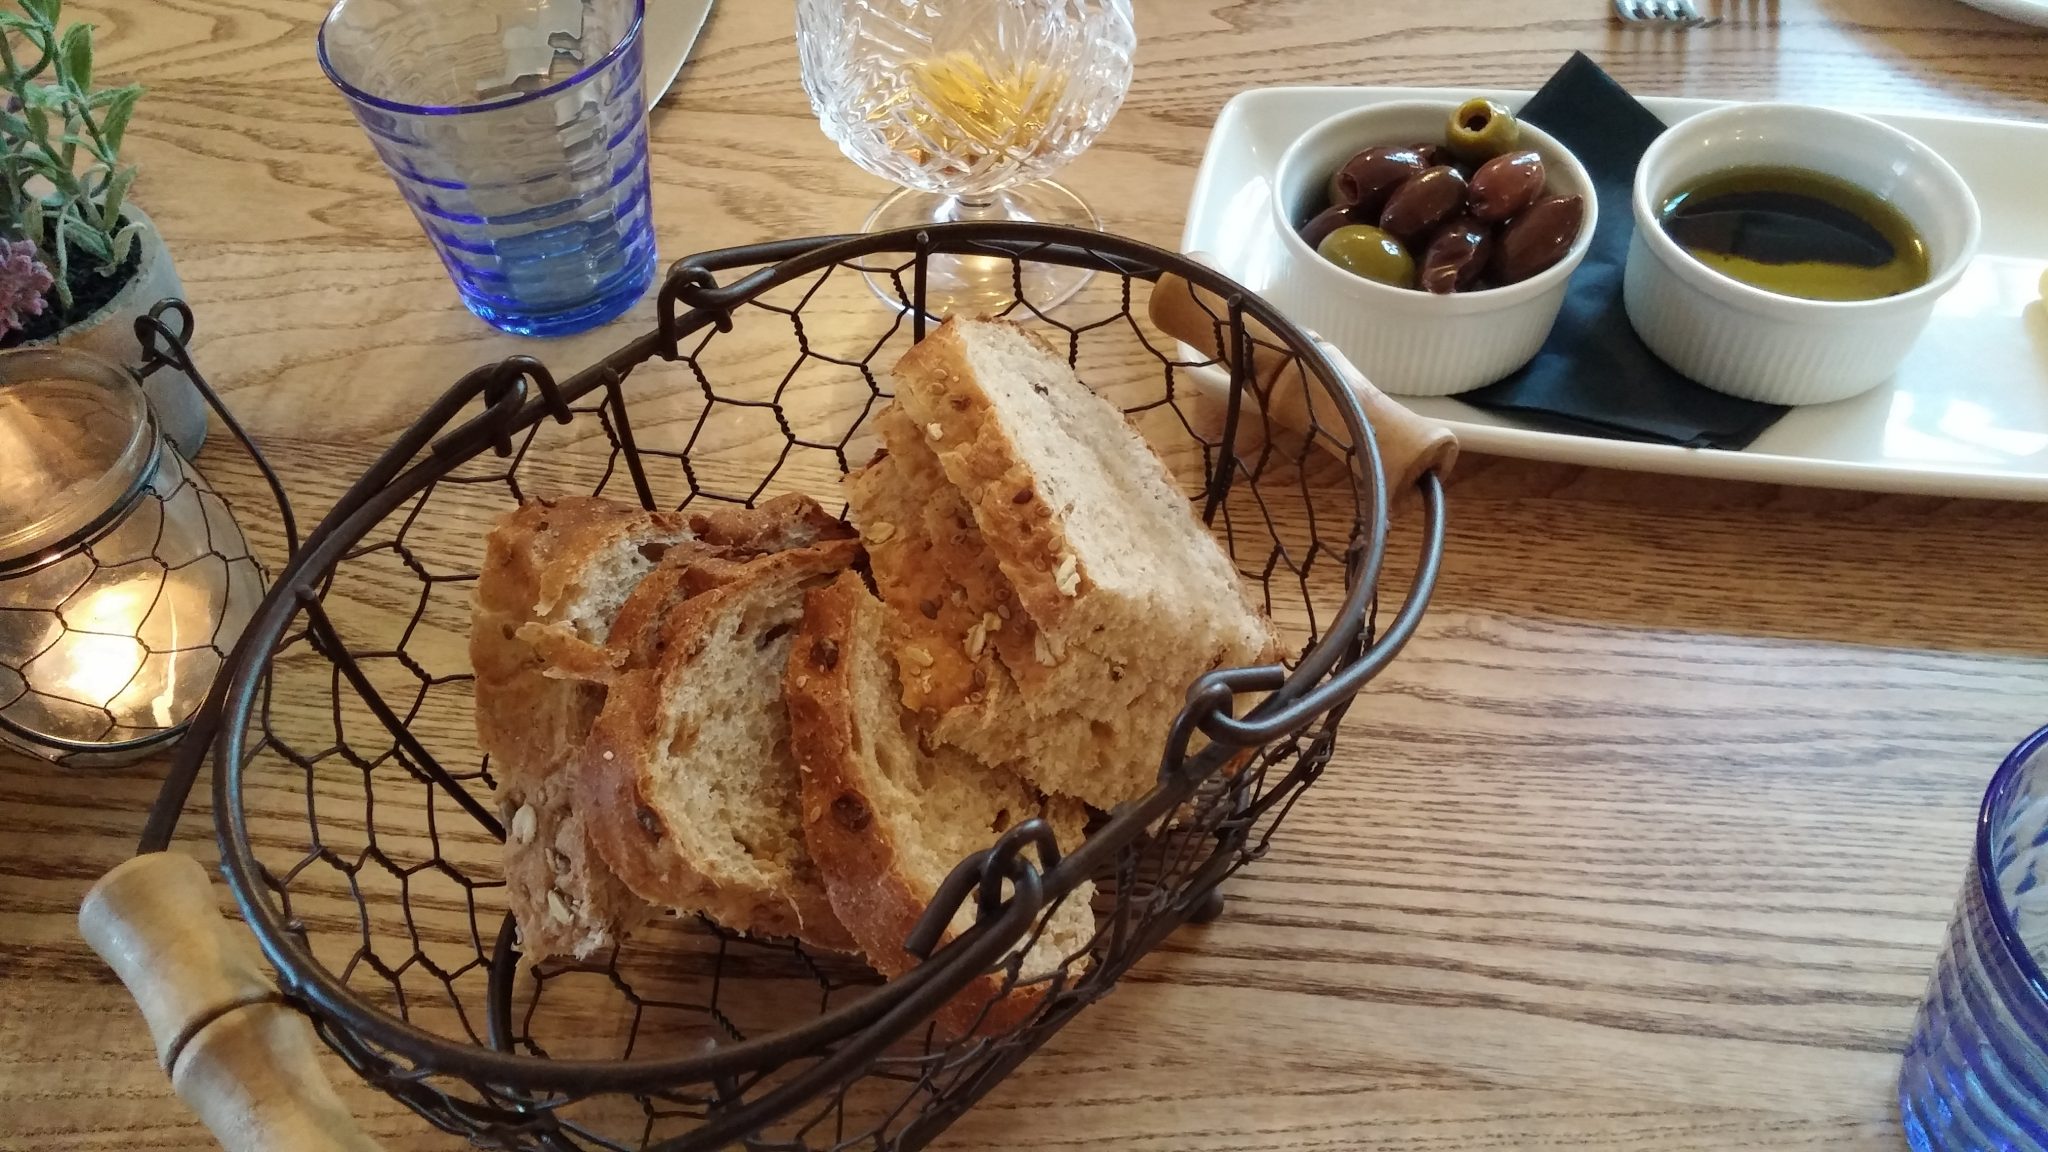 Artisan bread, olives, dipping oils